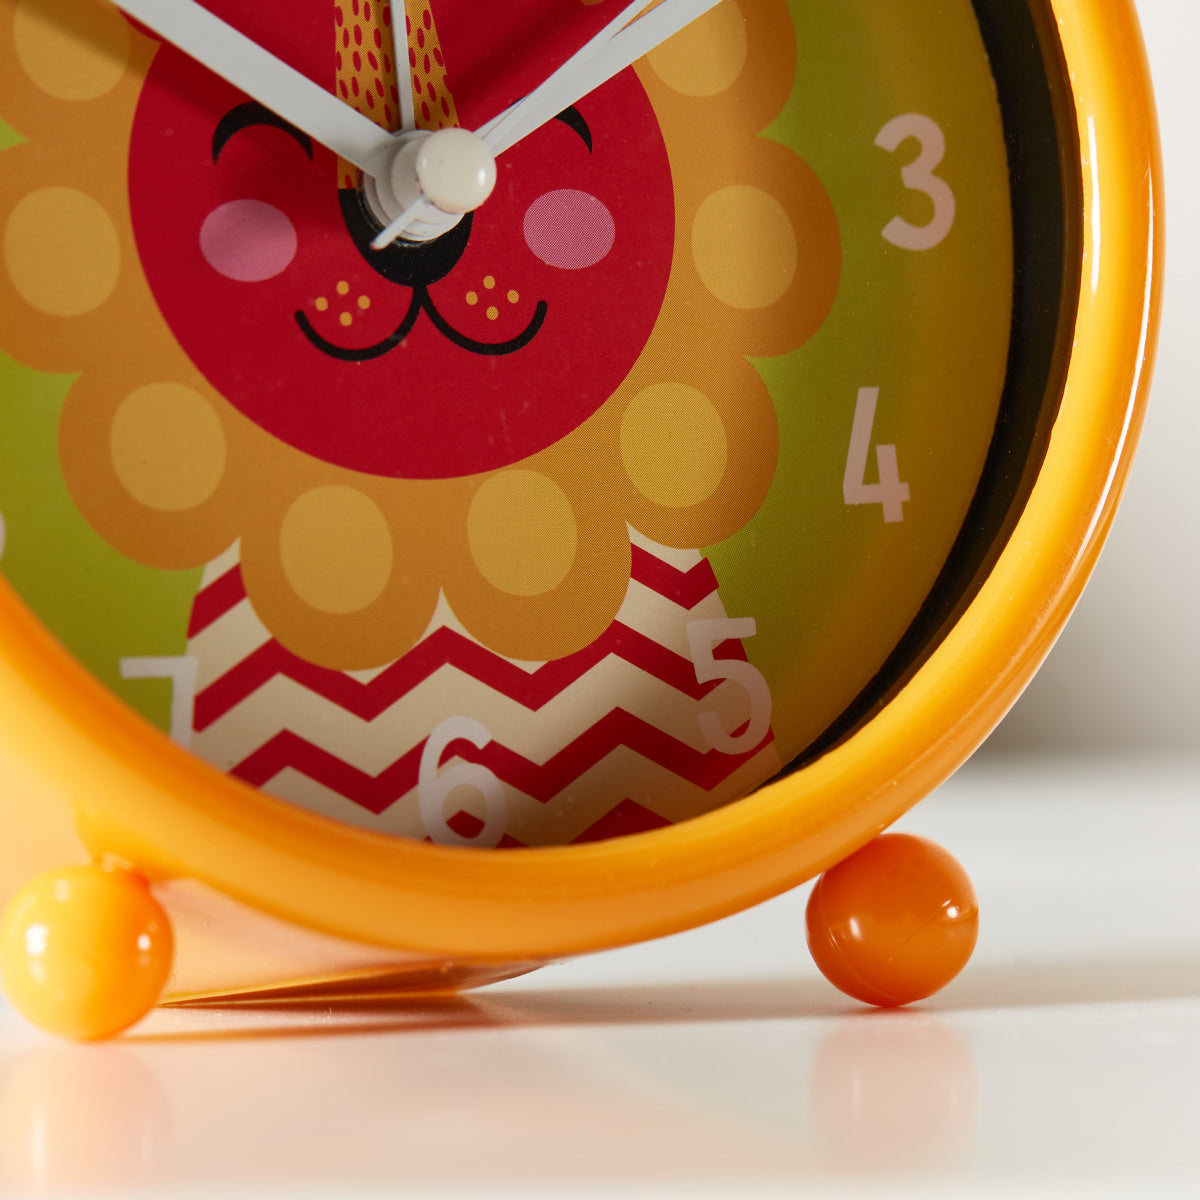 Mel Circular Lion Printed Clock